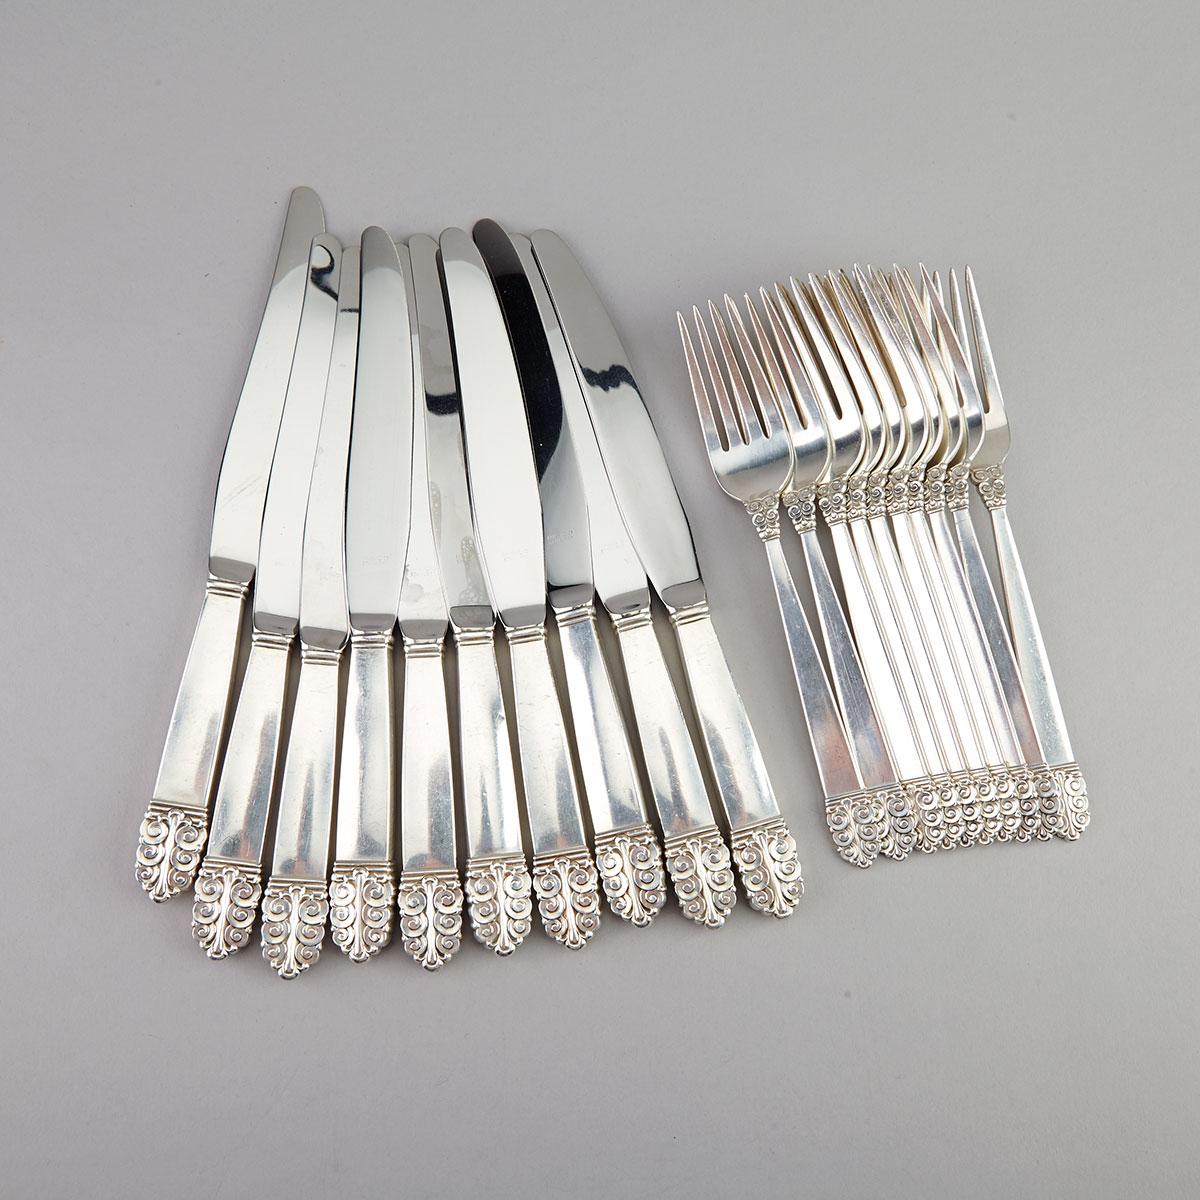 Ten American Silver ‘Northern Lights’ Pattern Dinner Knives and Ten Dinner Forks, International Silver Co., Meriden, Ct., 20th century